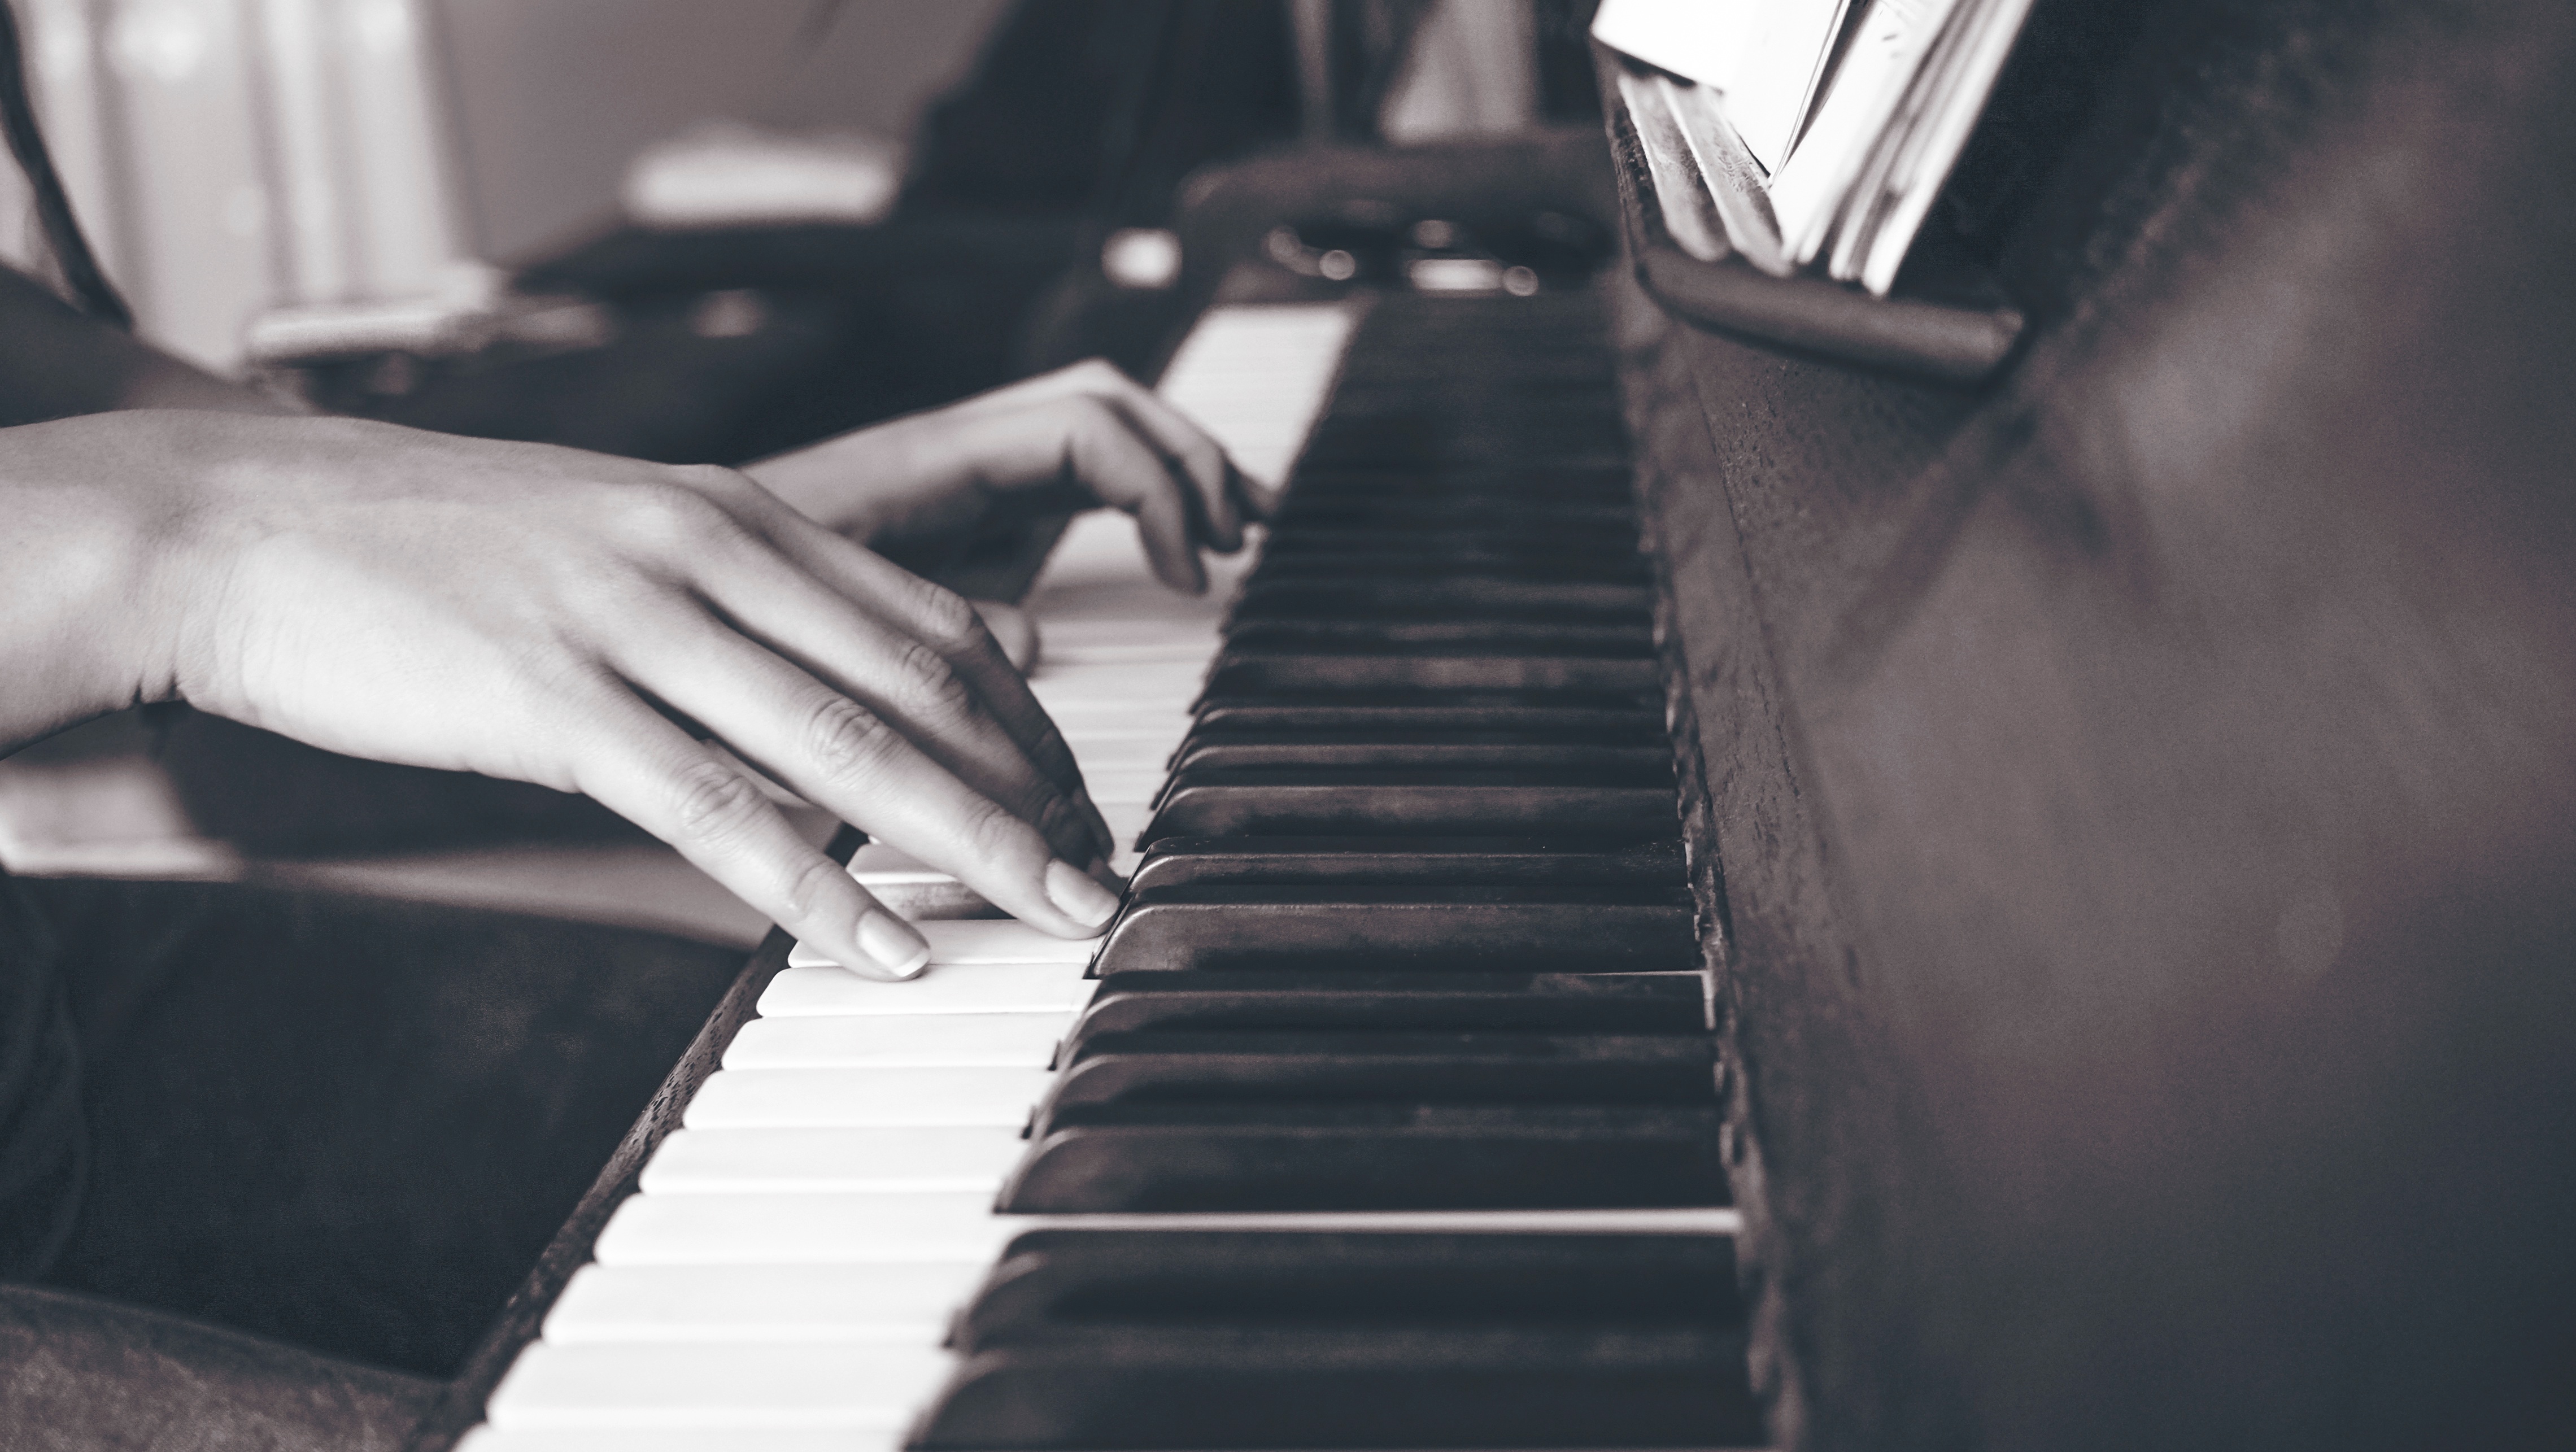 bw, piano, music, hands, chb, keys